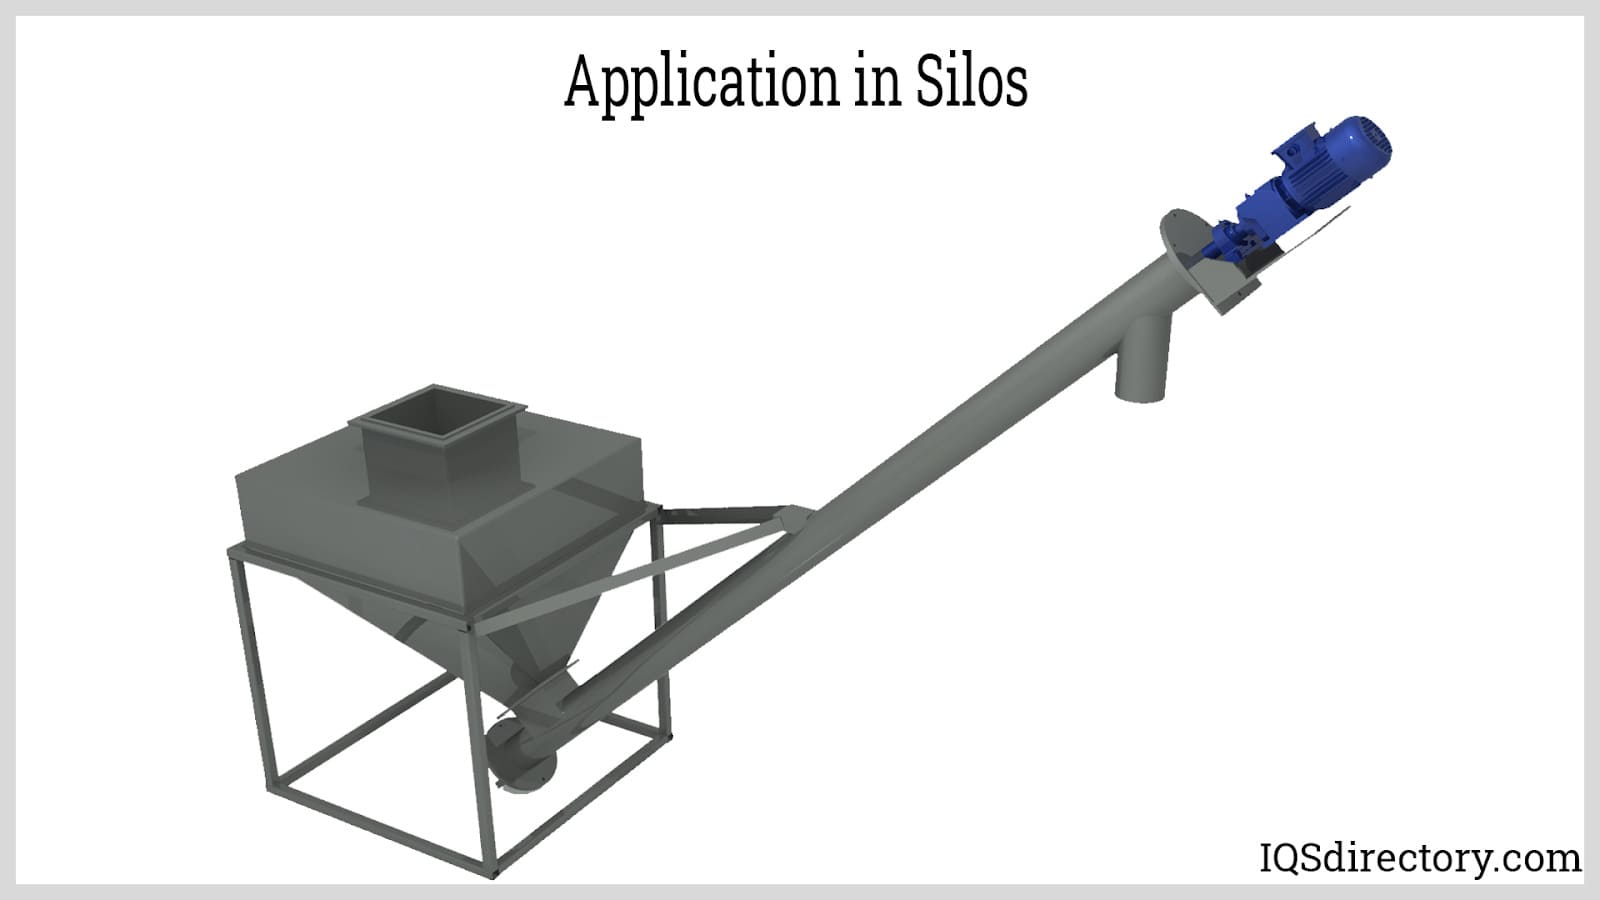 Application in Silos